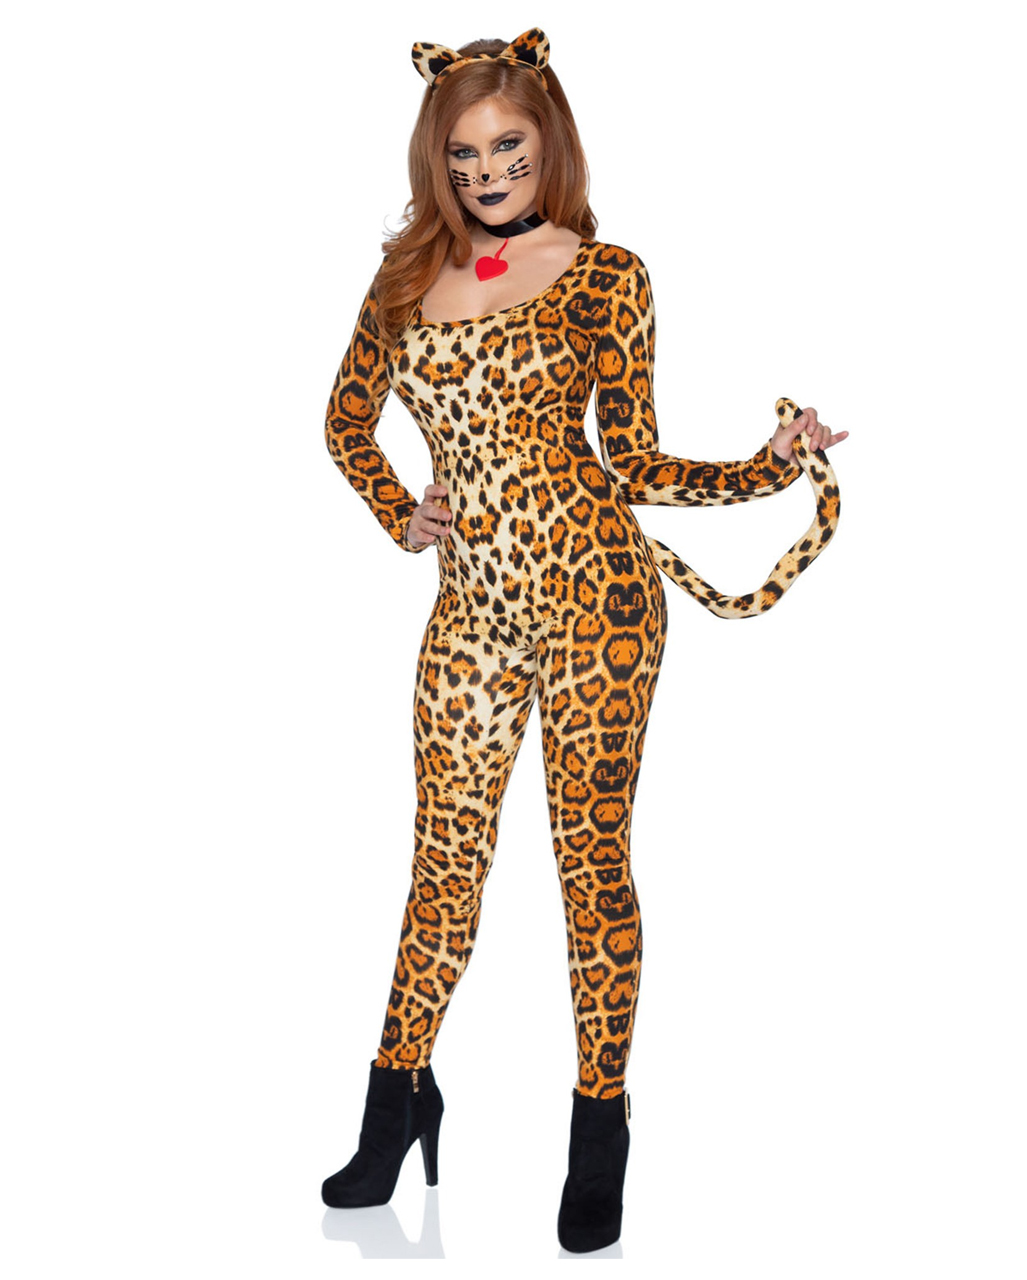 Fasching Karneval Party Süßes Leopard-Kostüm Hausanzug Leo-Muster lustiges Tier-Outfit Leoparden-Pyjama Sleepsuit Kapuze flauschig bequem Witziger Leoparden-Onesie Jumpsuit Cosplay Einteiler